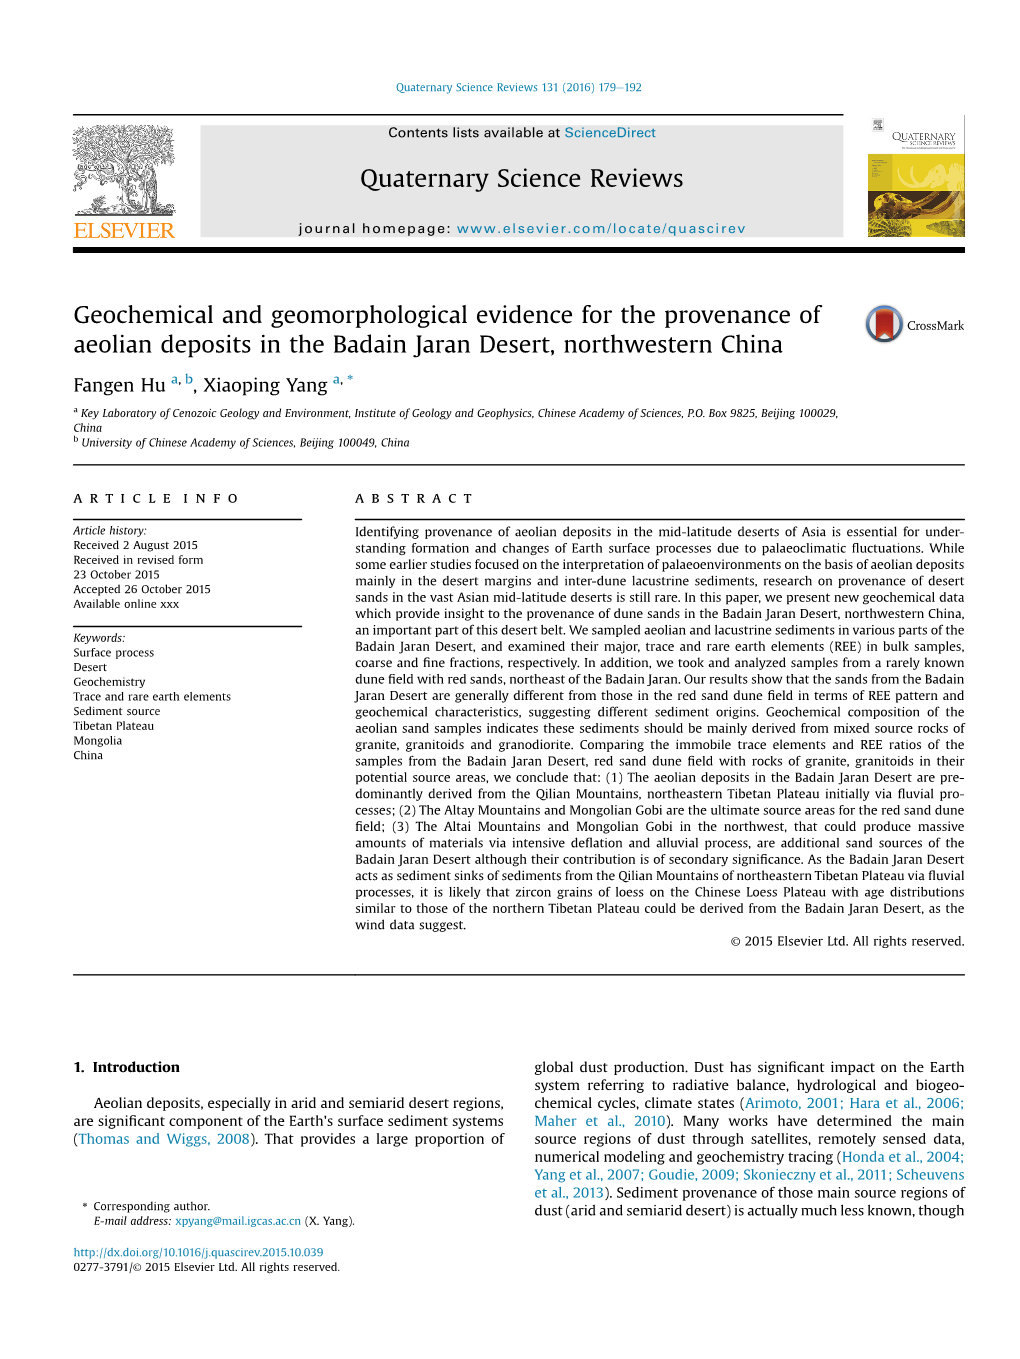 Geochemical and Geomorphological Evidence for the Provenance of Aeolian Deposits in the Badain Jaran Desert, Northwestern China